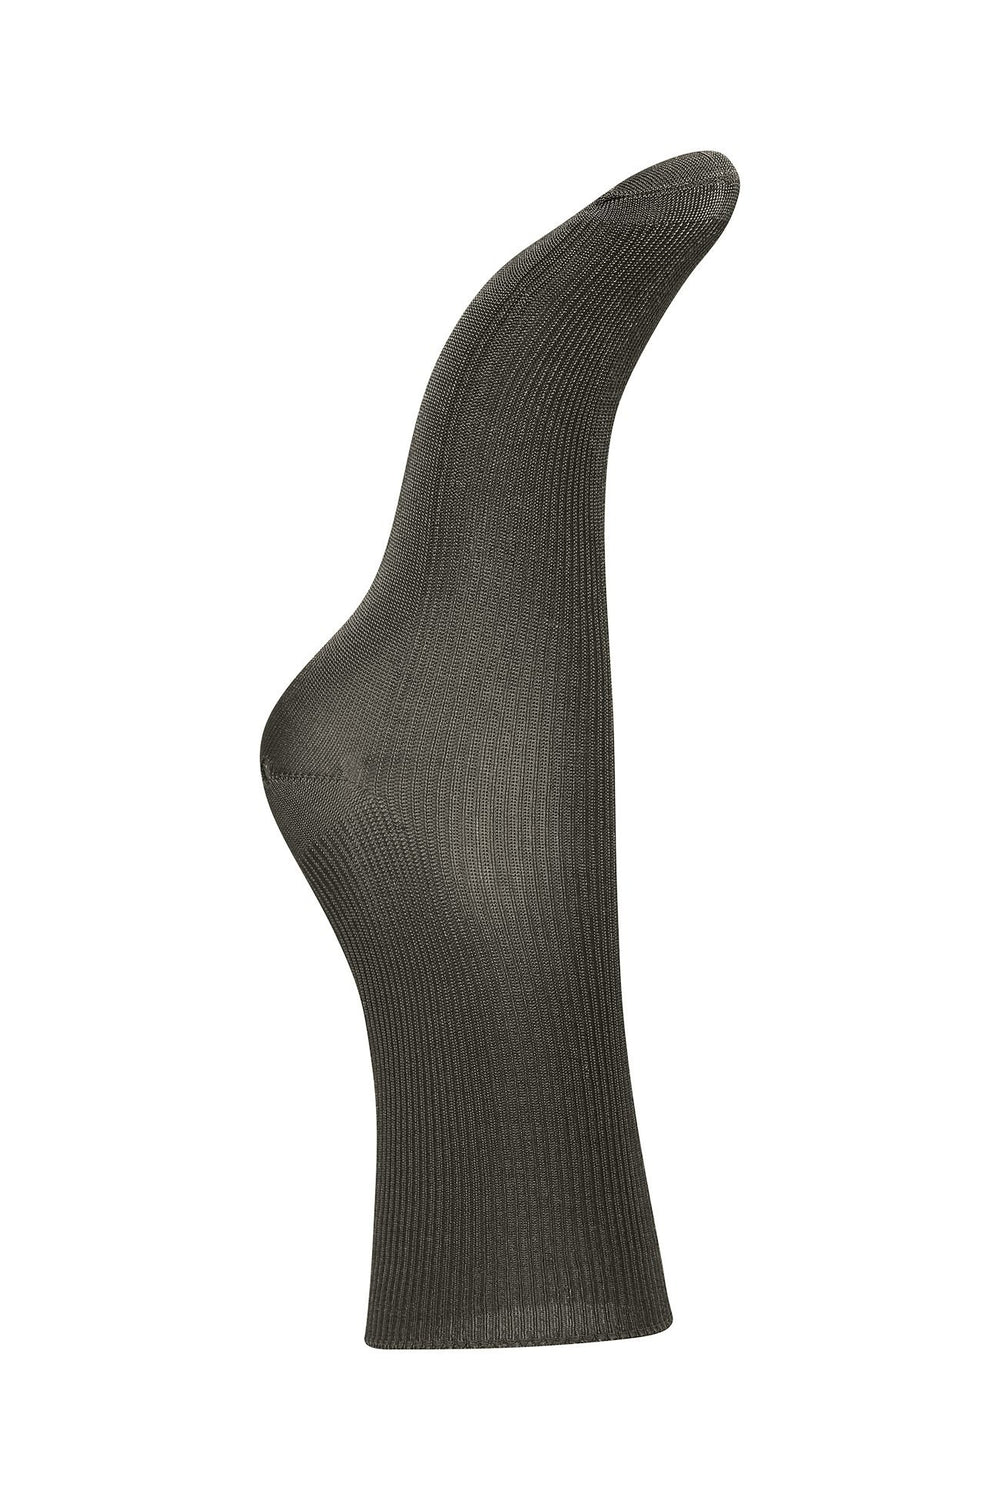 IAVERIA Asphalt Grey Socks